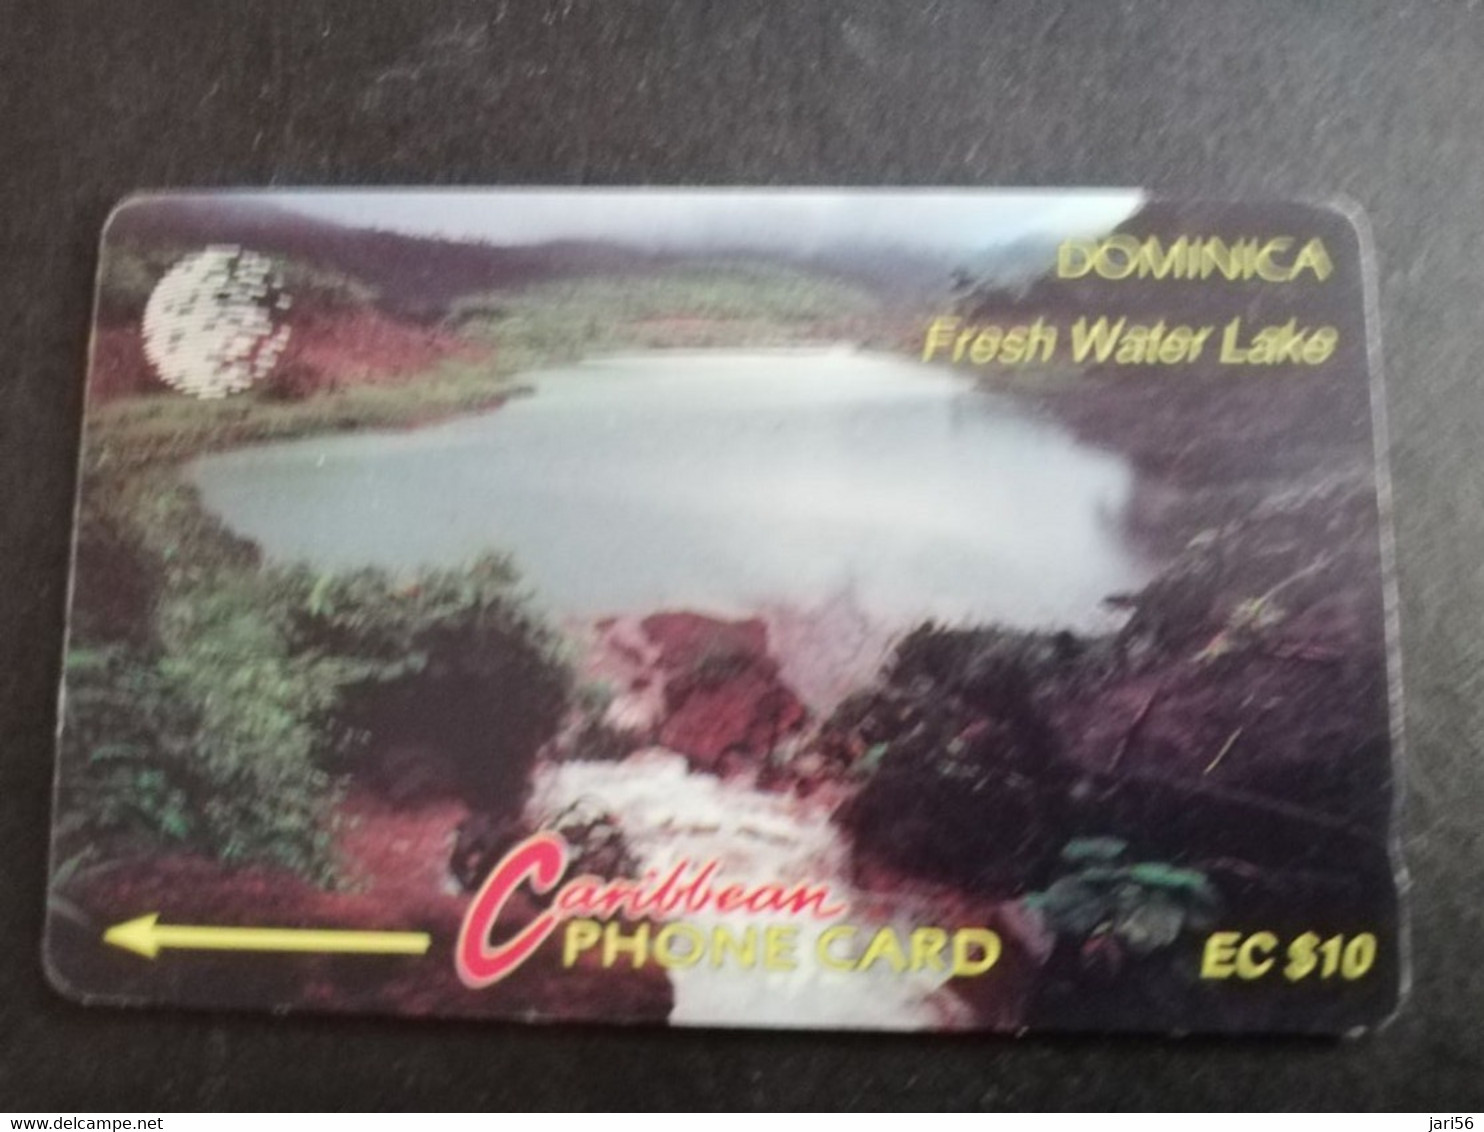 DOMINICA / $10,- GPT CARD  6CDMB  FRESCH WATER  LAKE       Fine Used Card  ** 6290 ** - Dominique